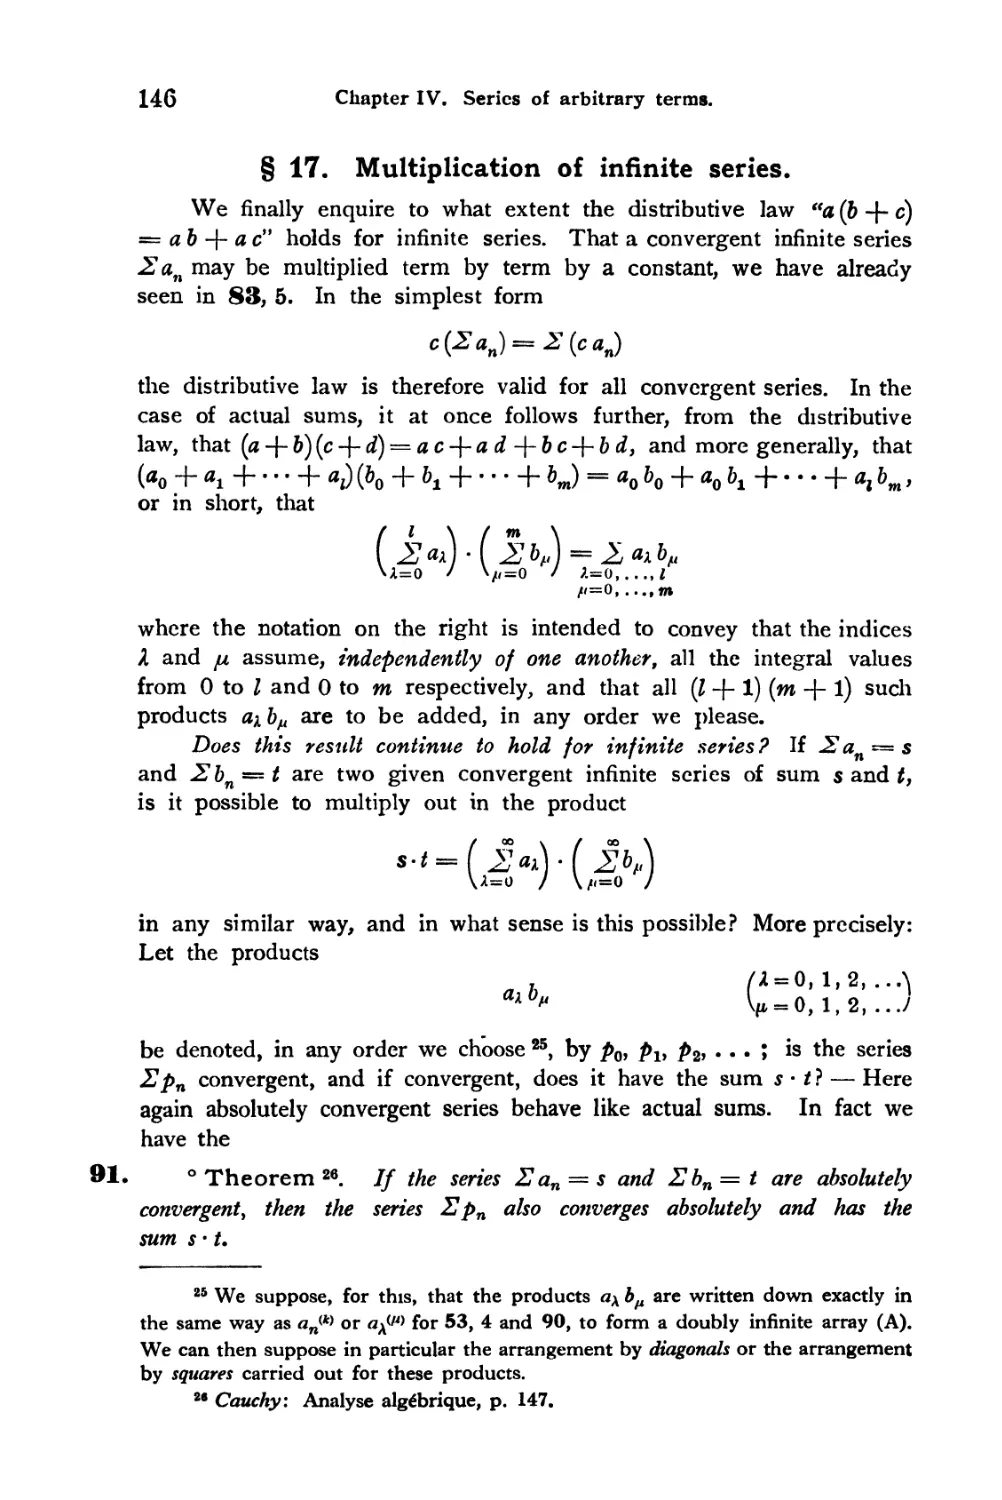 § 17. Multiplication of infinite series